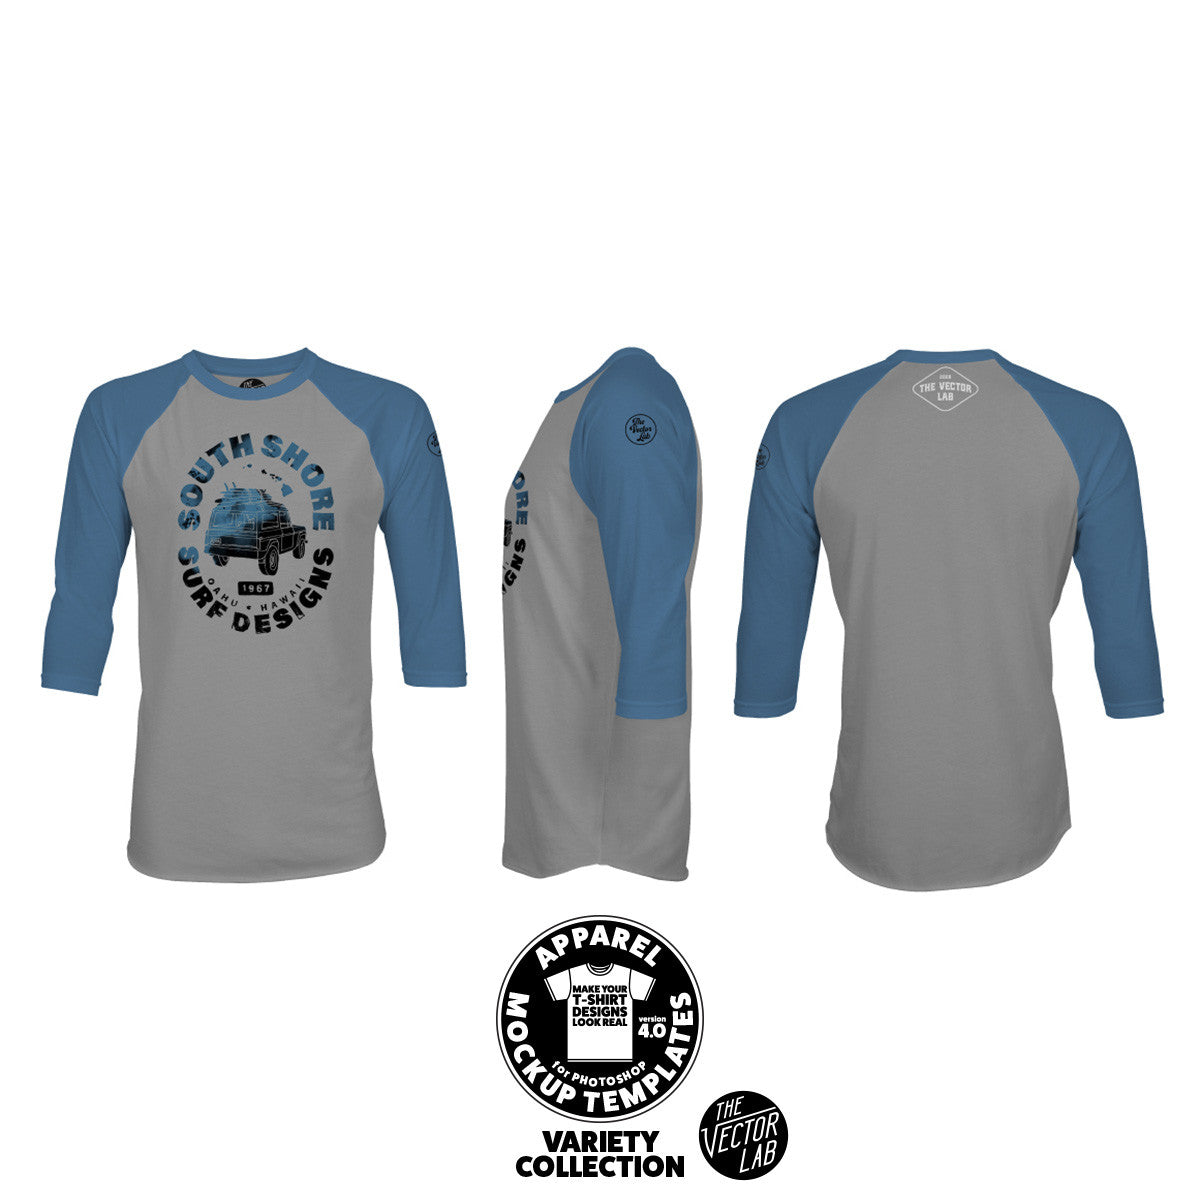 Download Men S Raglan T Shirt Mockup Templates Thevectorlab